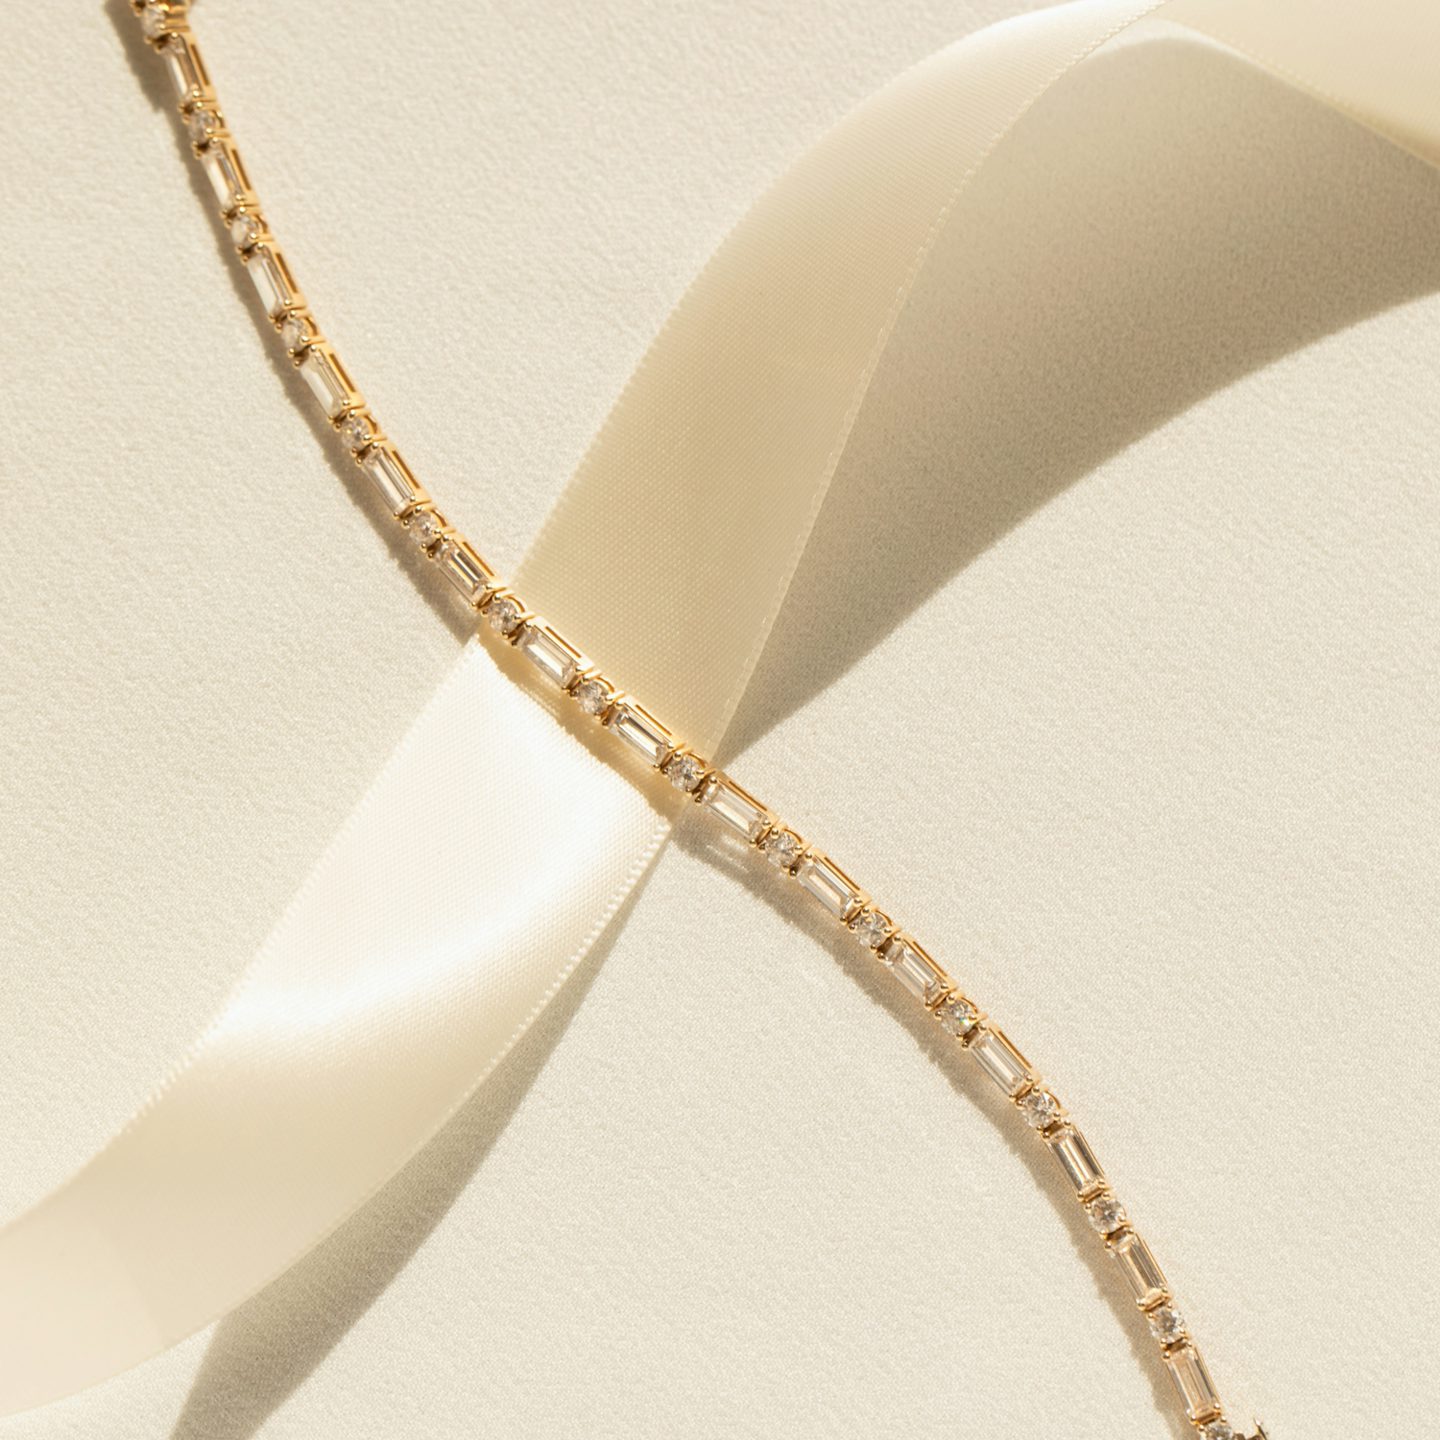 Mixed Shape Bracelet | Round Brilliant and Baguette | 14k | 18k White Gold | Chain length: 6.5 | Diamond size: Large